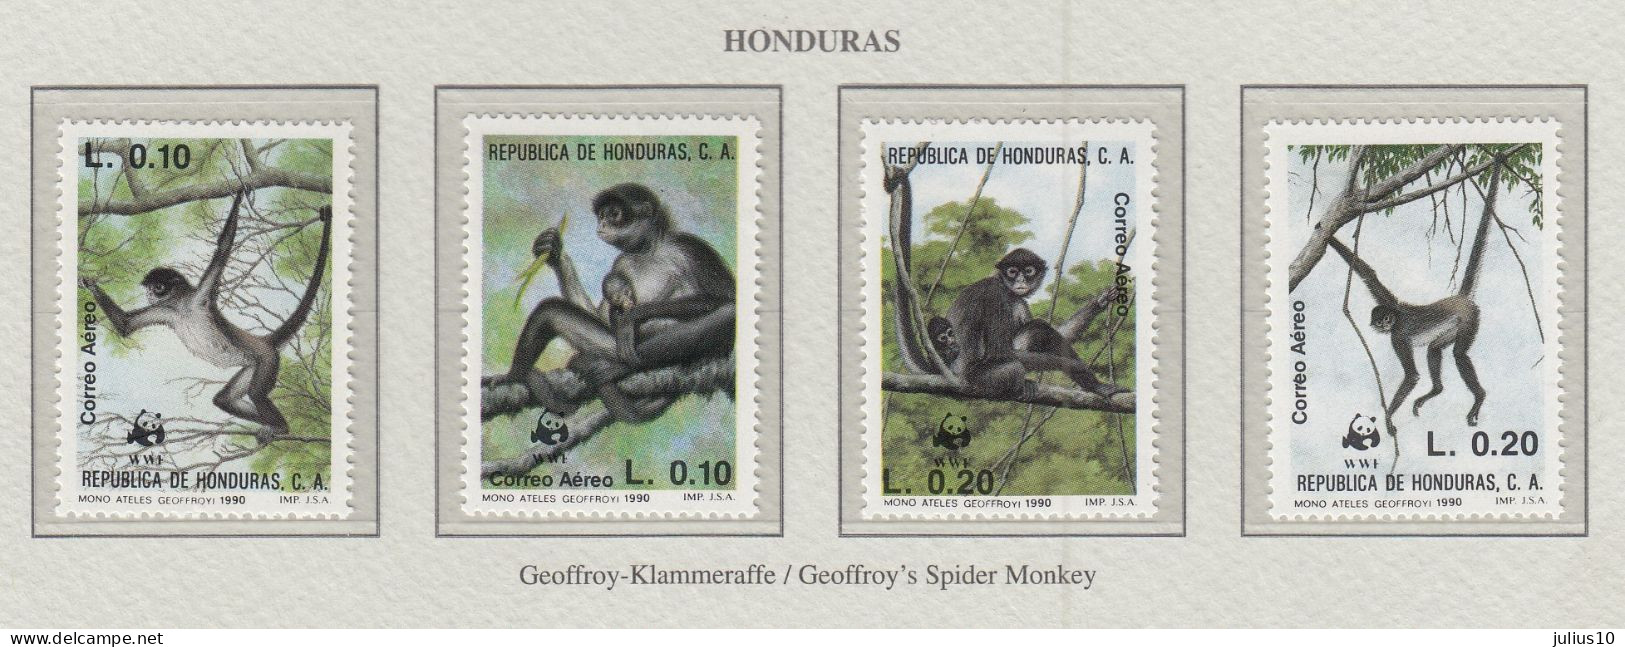 HONDURAS 1990 WWF Mammals Monkeys Mi 1084-1087 MNH(**) Fauna 777 - Monkeys